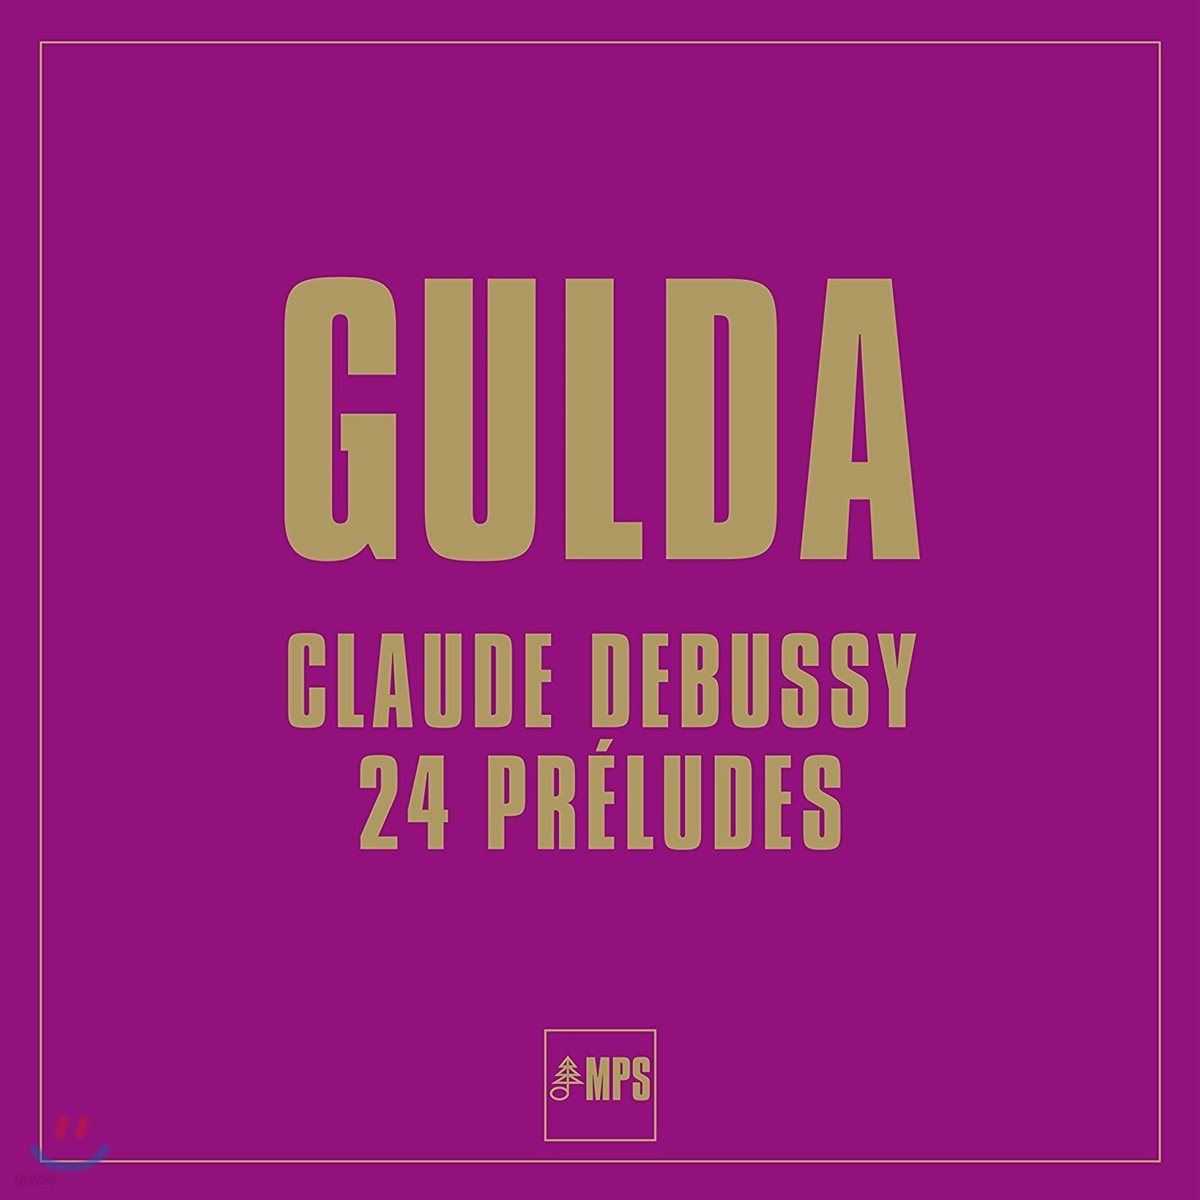 Friedrich Gulda 드뷔시: 24개의 전주곡 (Debussy: 24 Preludes)